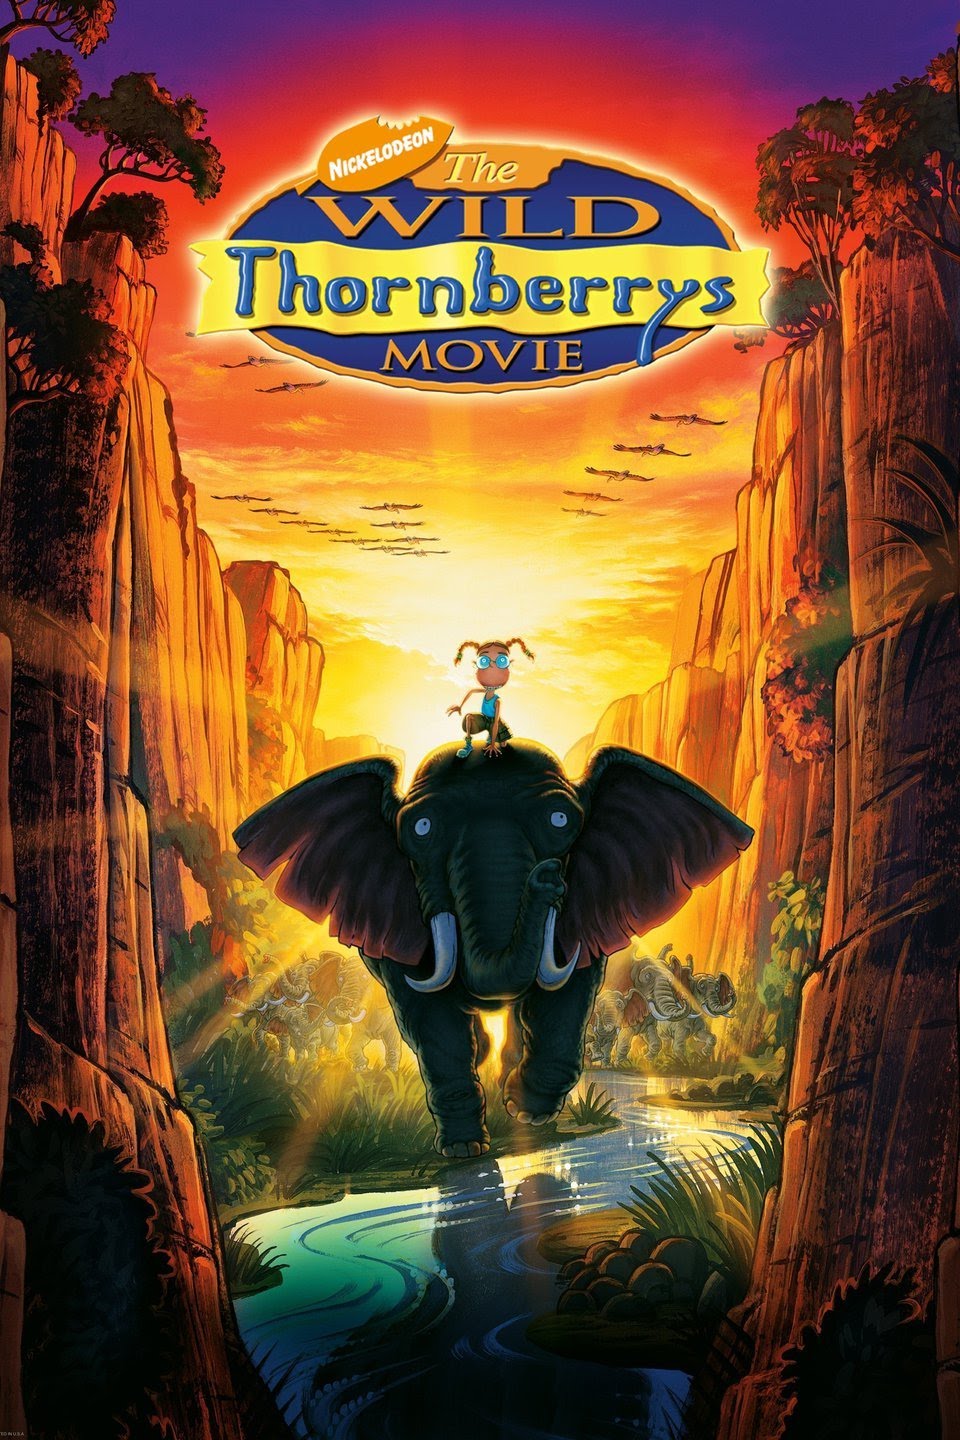 Animators used DigiCel FlipBook to make The Wild Thornberry's